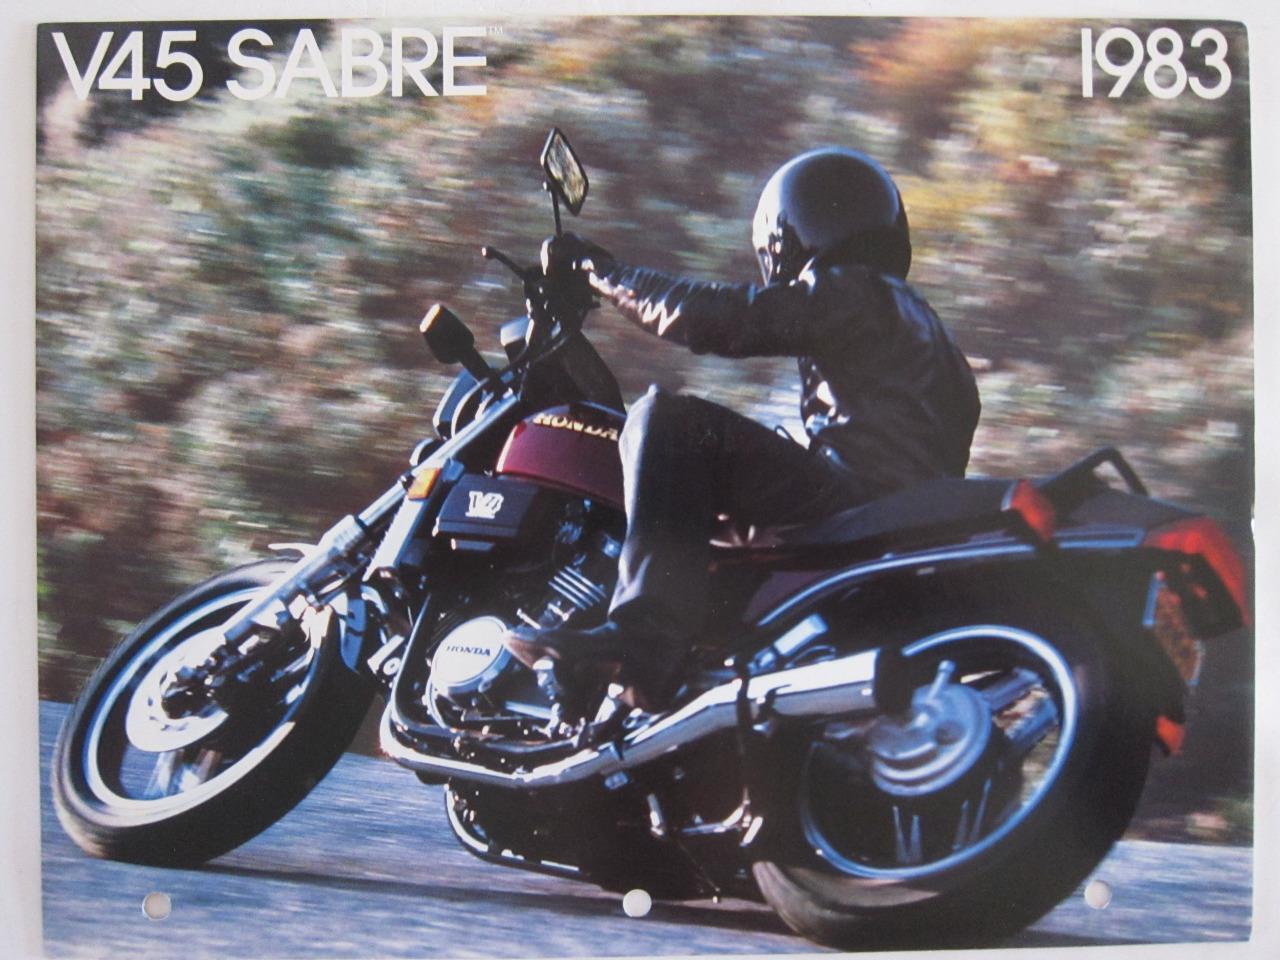 HONDA motorcycle brochure V 45 SABRE Uncirculated high quality color photos 1983